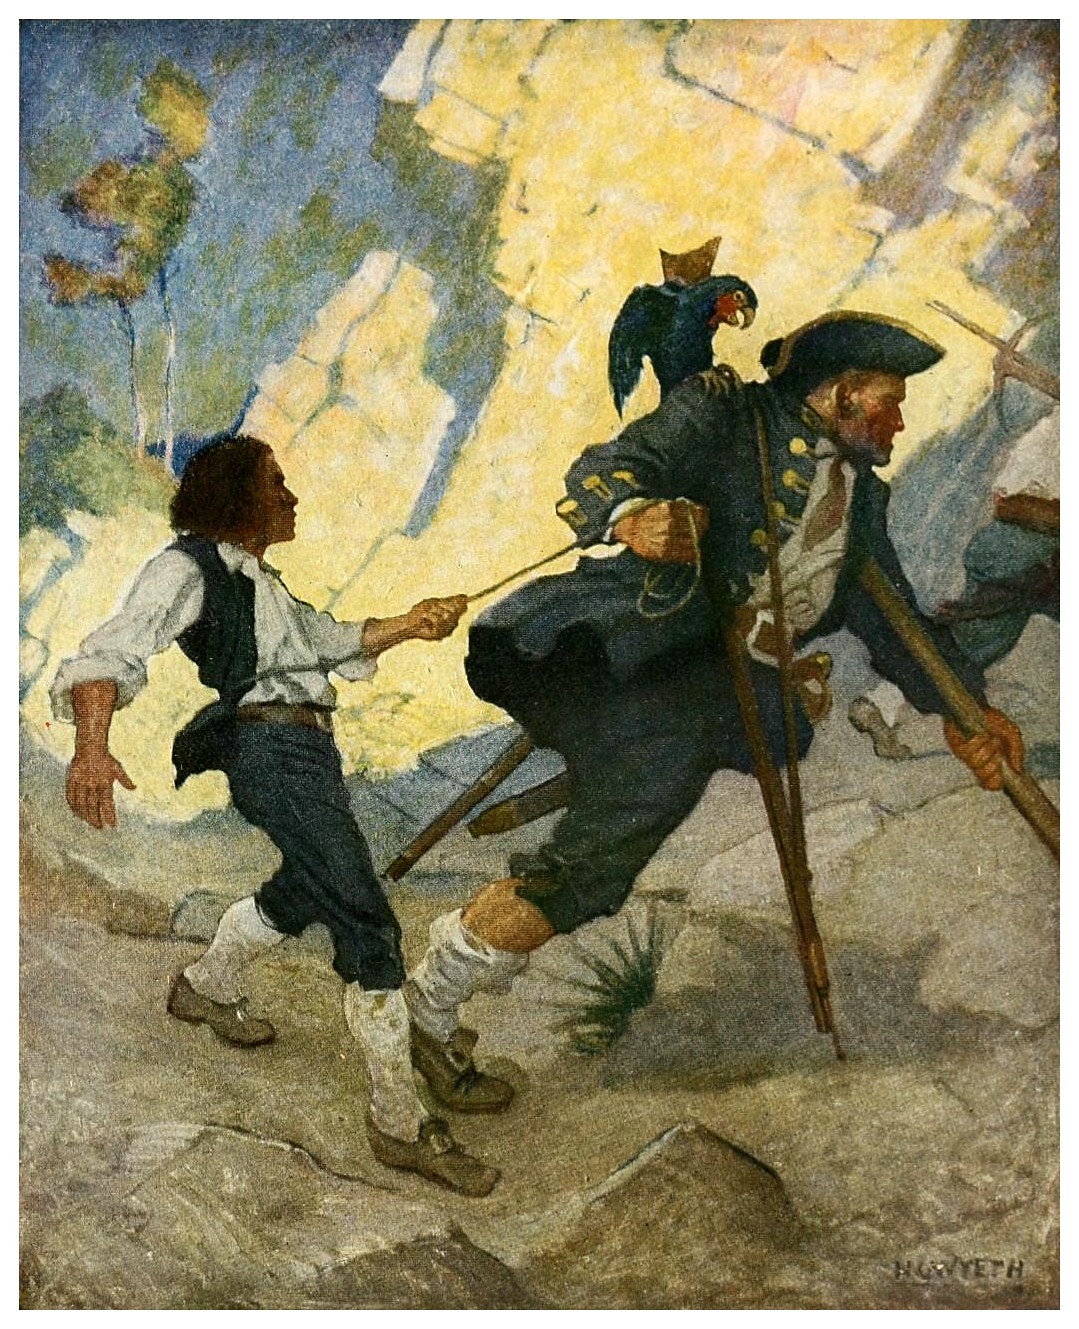 007-Treasure Island -1911-ilustrada por NC Wyeth